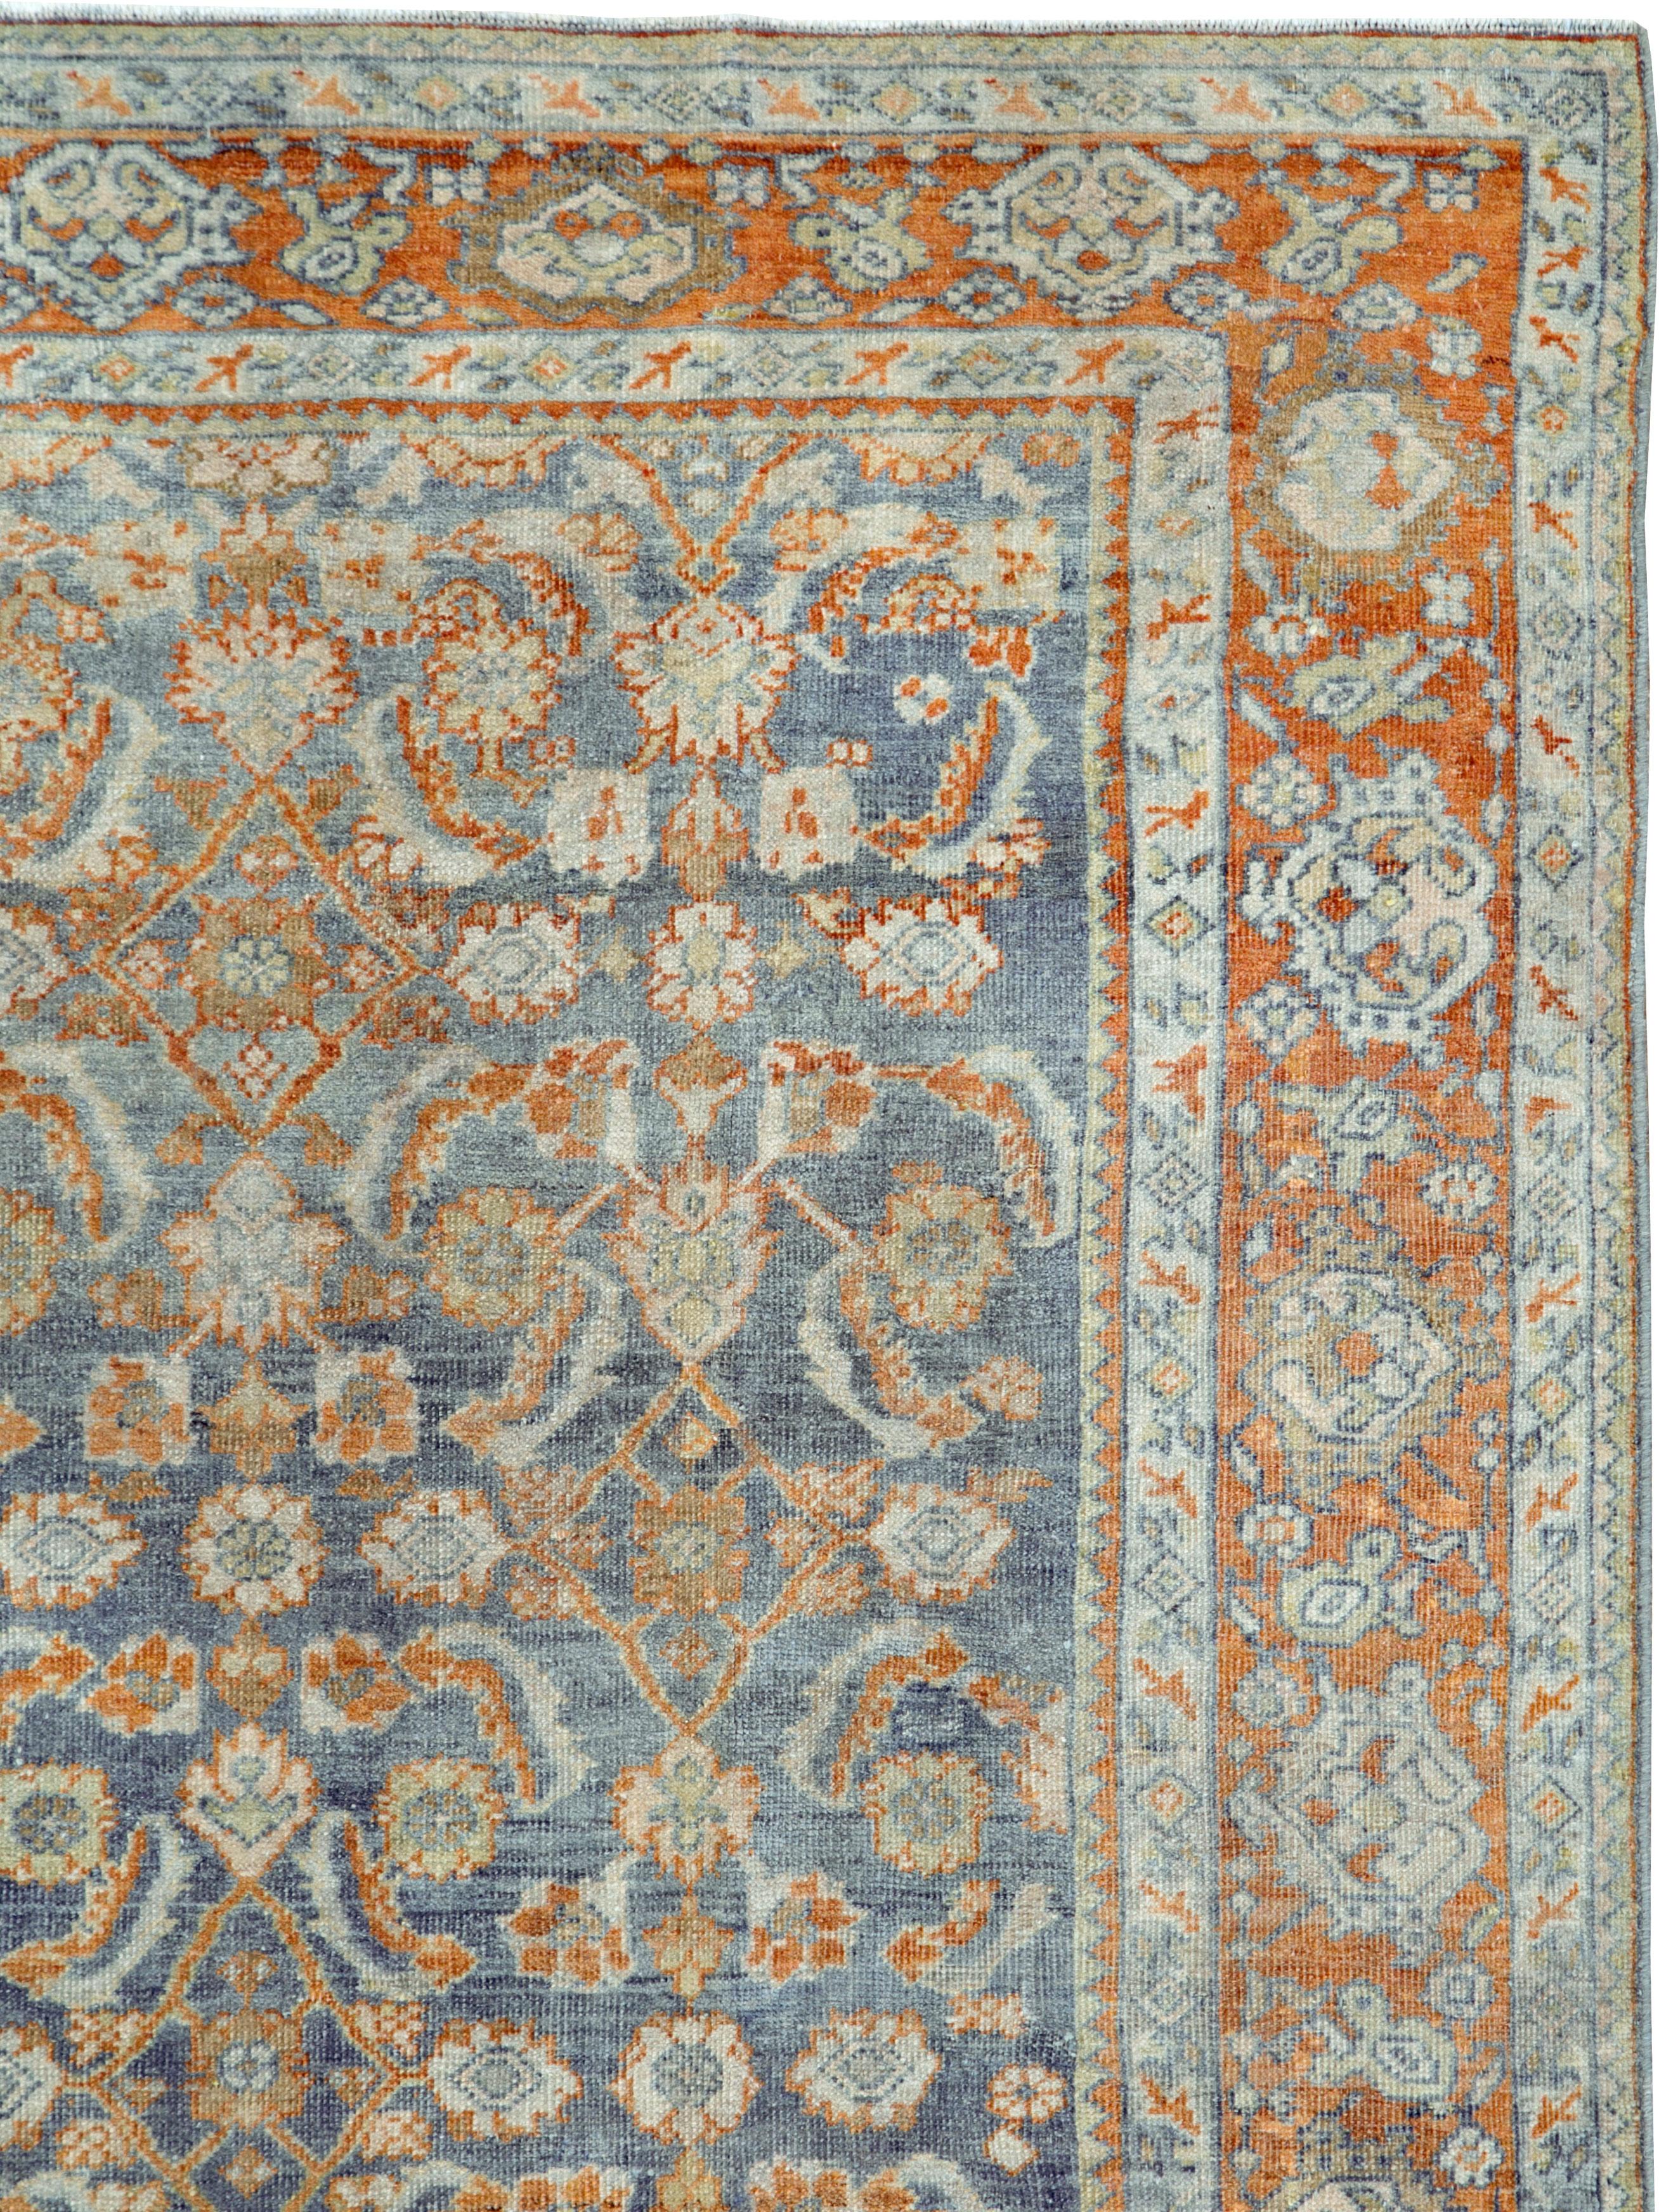 Antique Persian Mahal Carpet (Volkskunst)